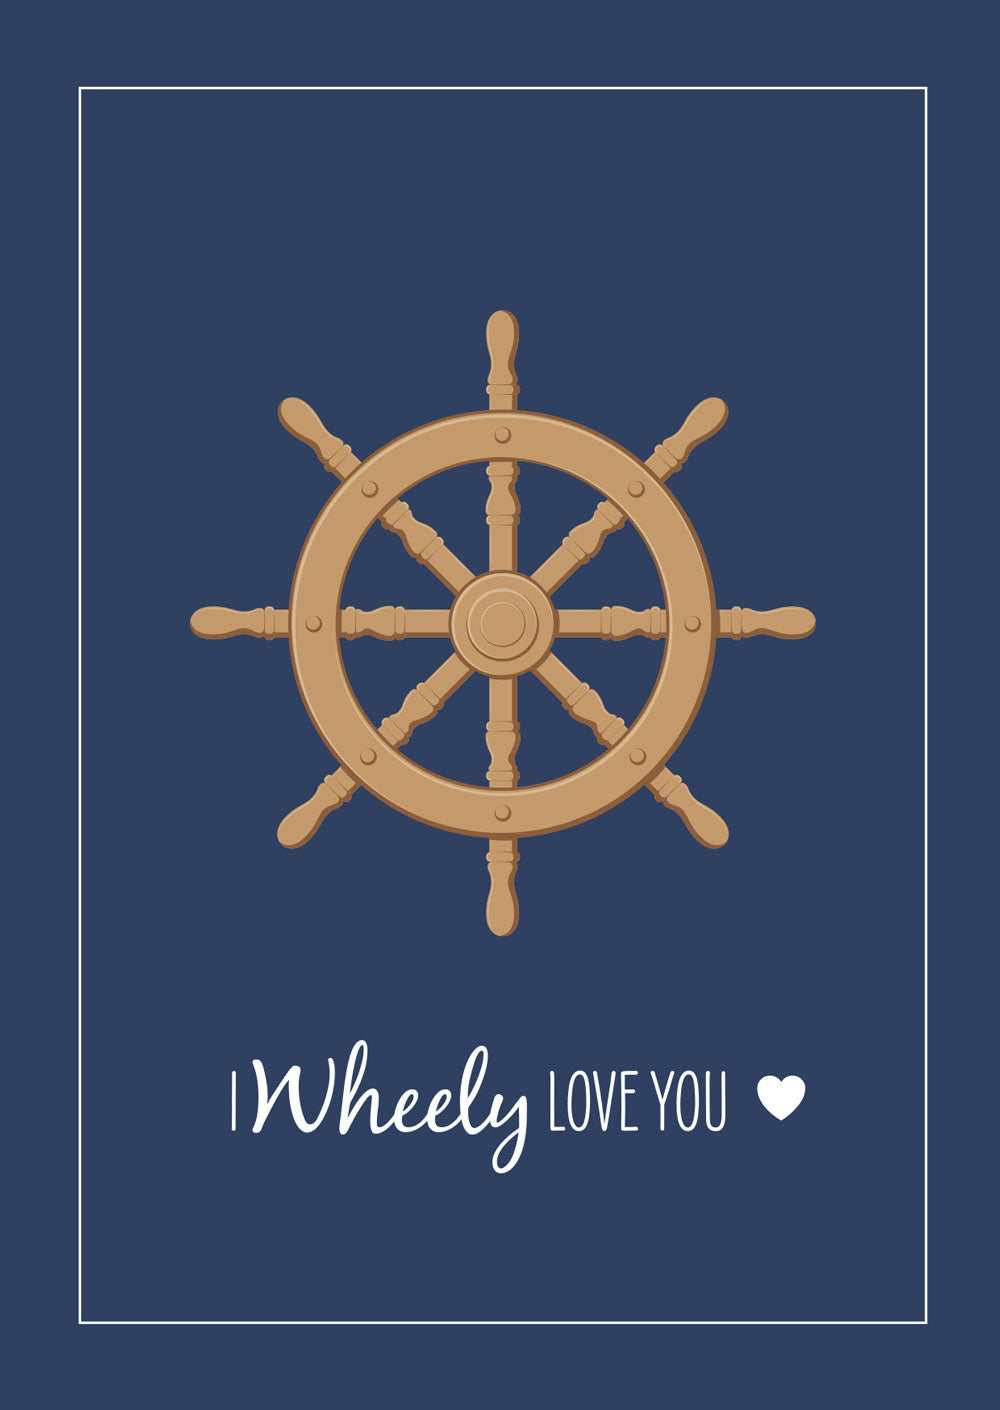 Lovers Card - Ships Wheel